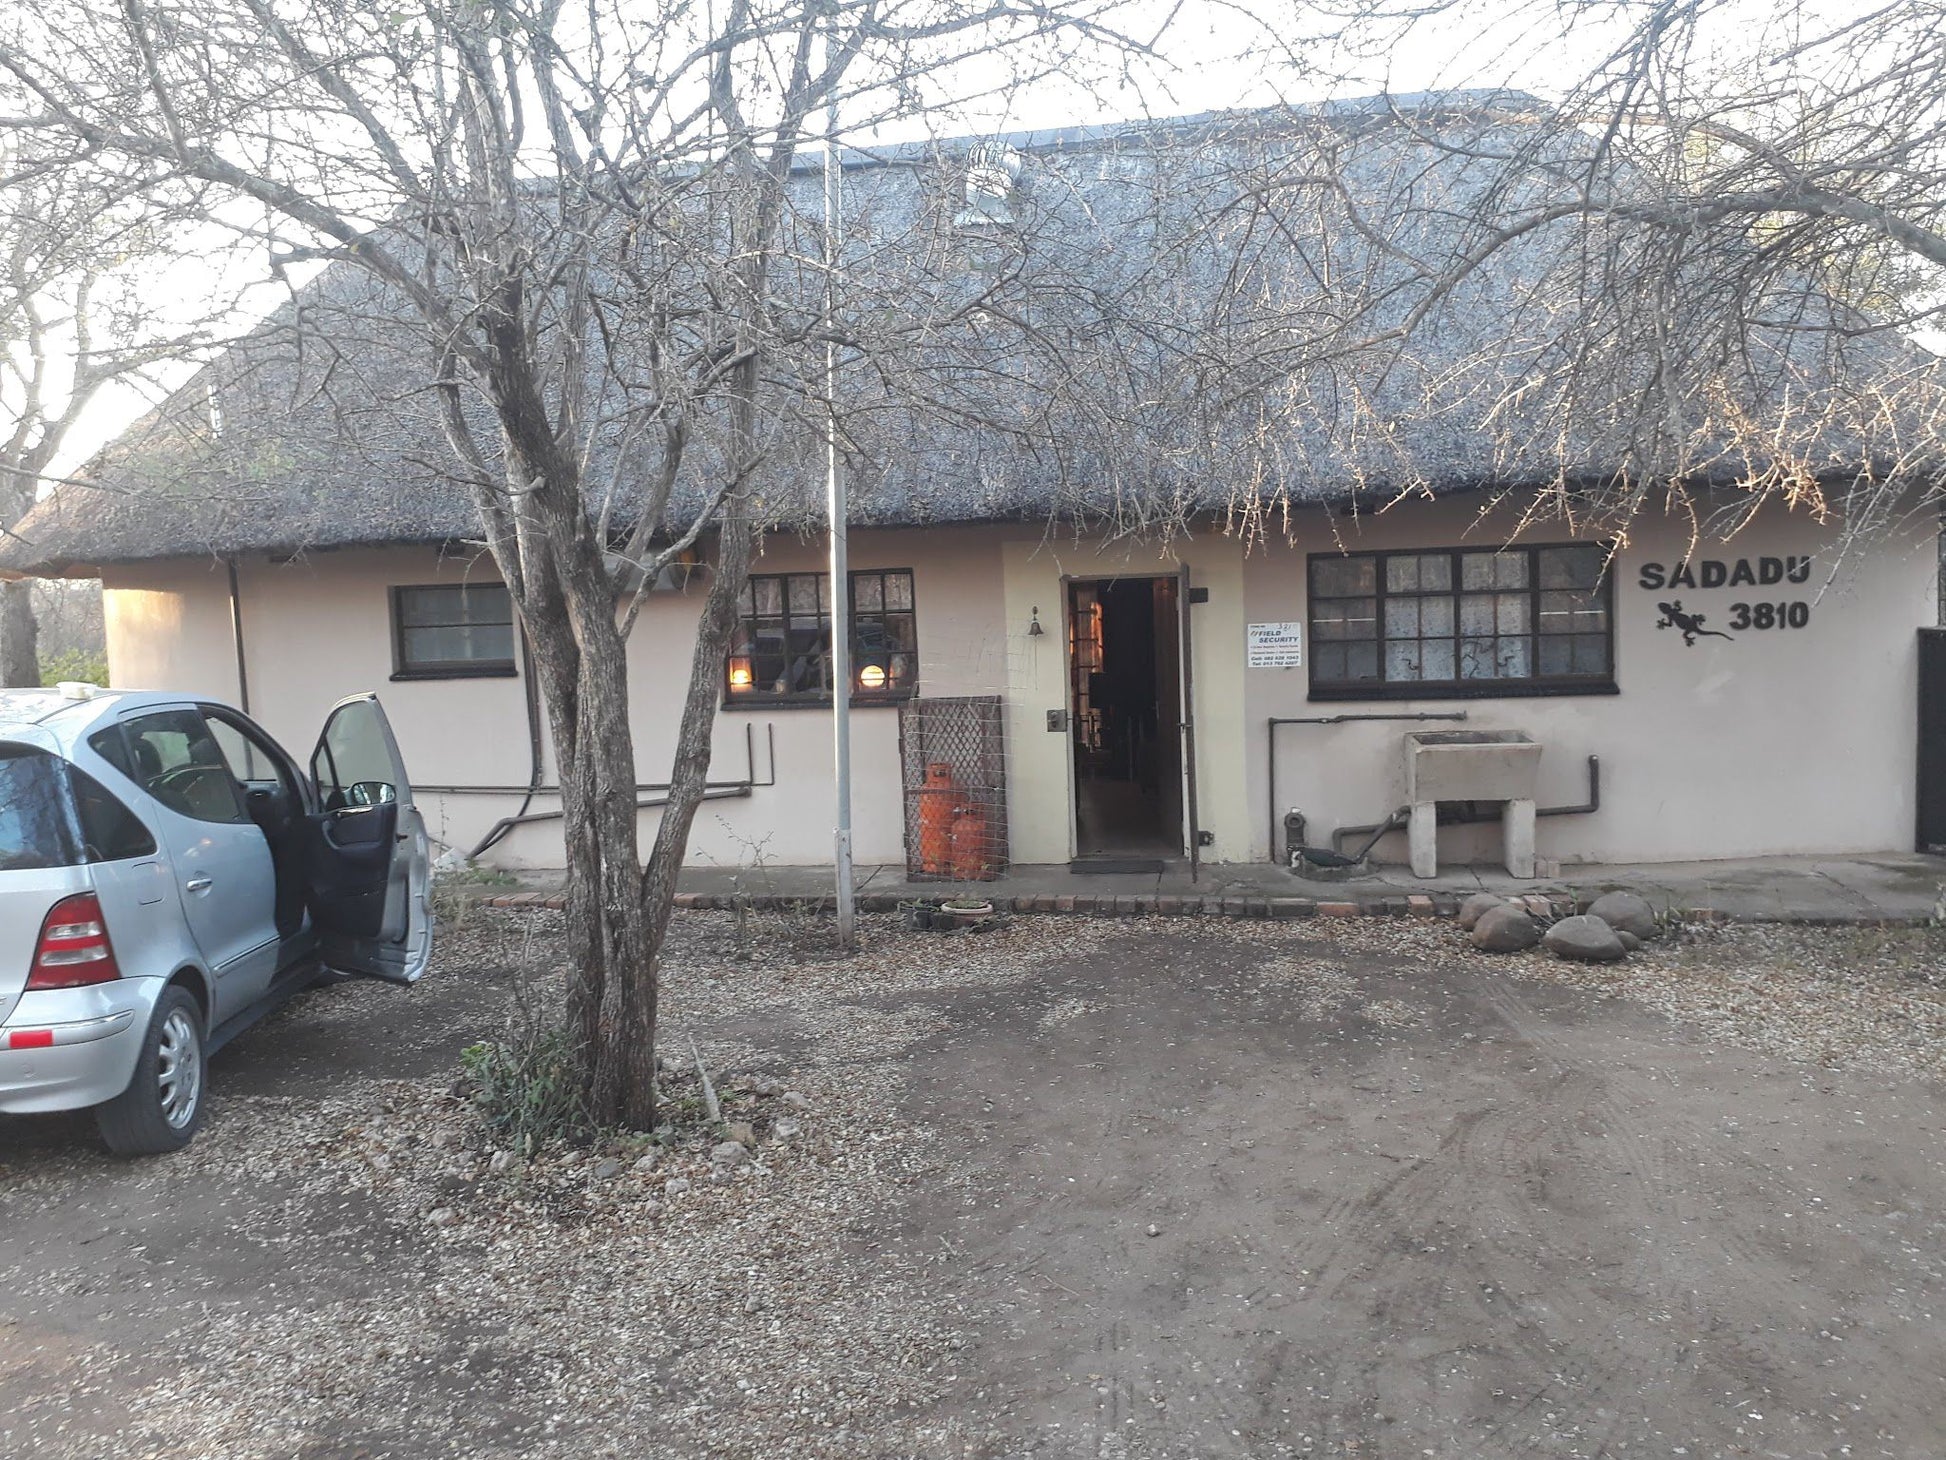 Sadadu Marloth Park Mpumalanga South Africa Unsaturated, Building, Architecture, House, Car, Vehicle